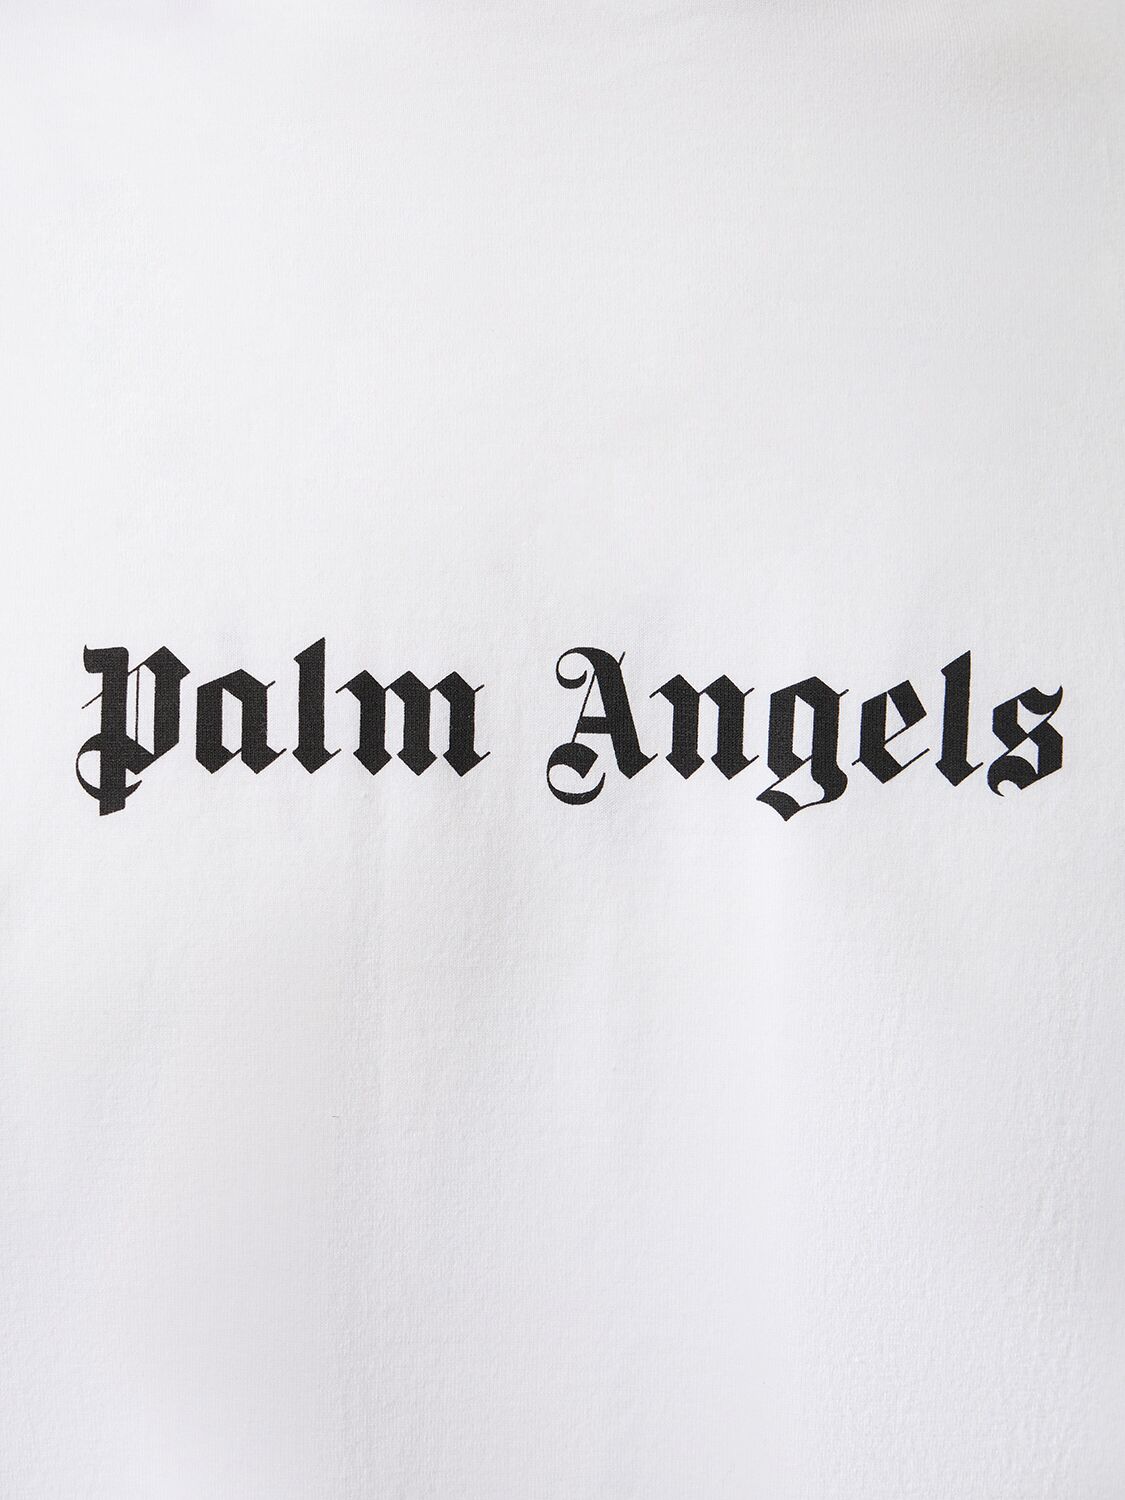 Shop Palm Angels Classic Logo Slim Cotton T-shirt In White